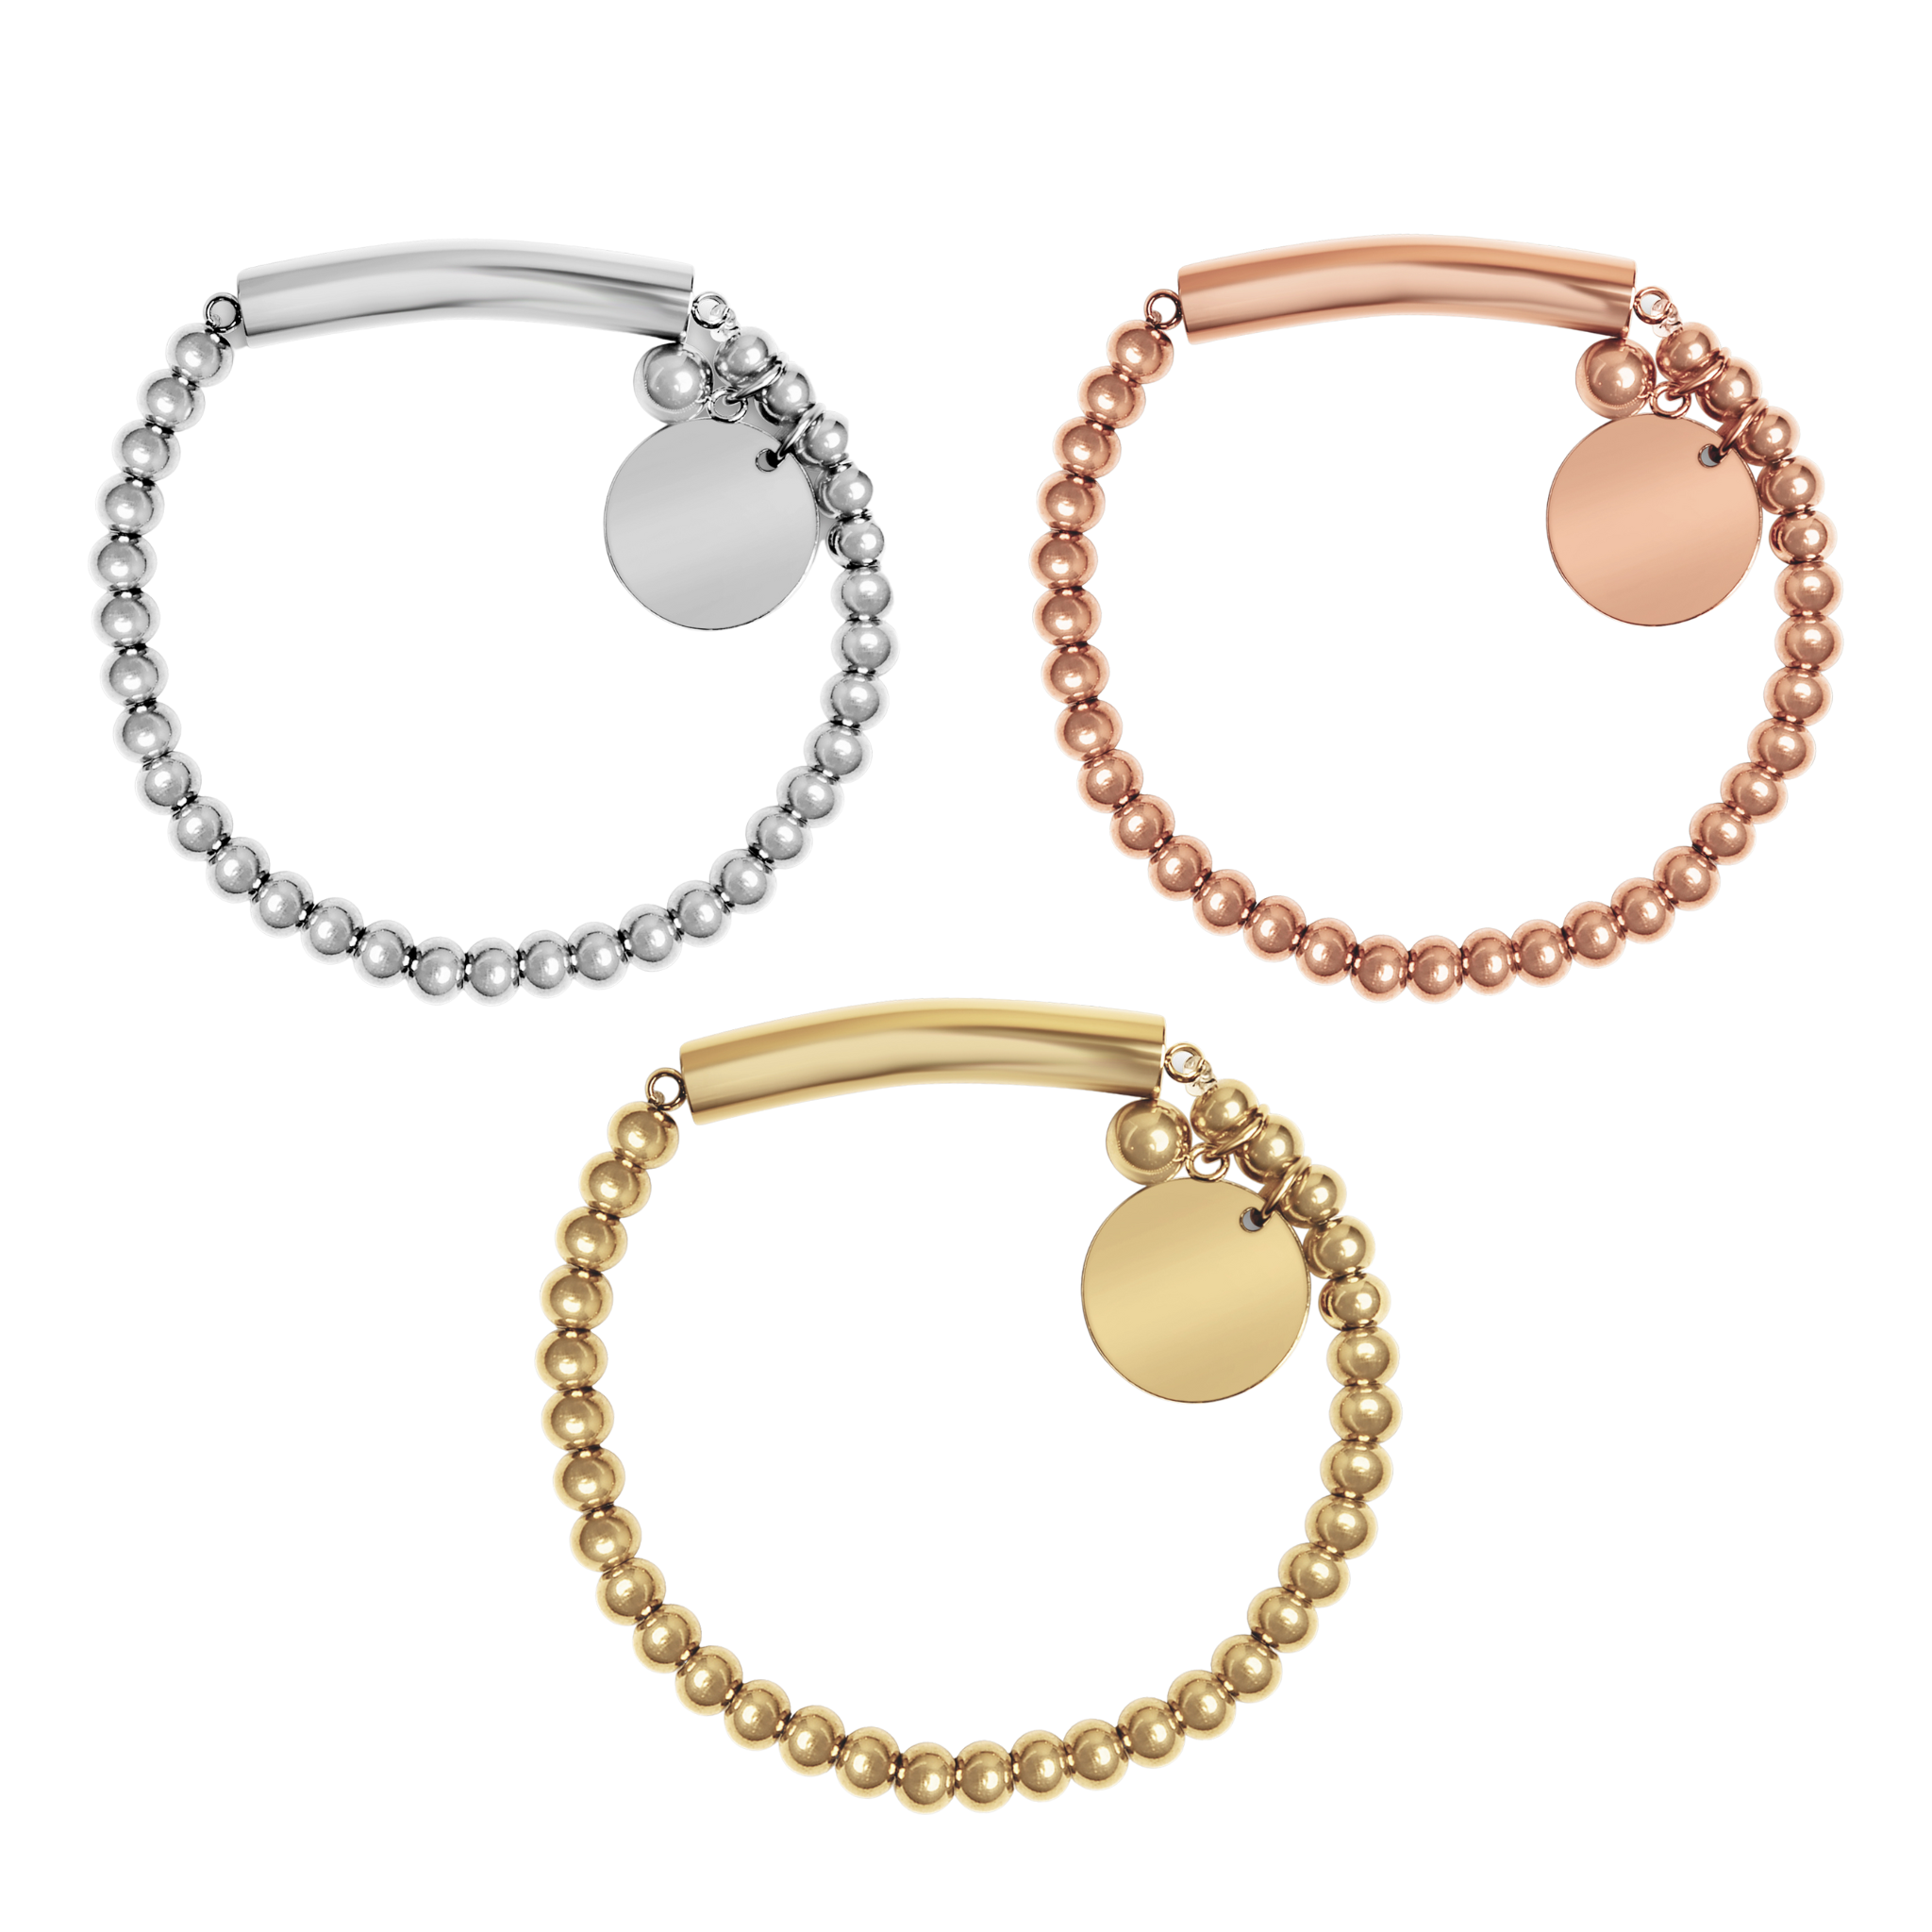  Key charm bracelet, key charm, adjustable bracelet, skeleton  key, personalize bracelet, initial bracelet, monogram : Handmade Products